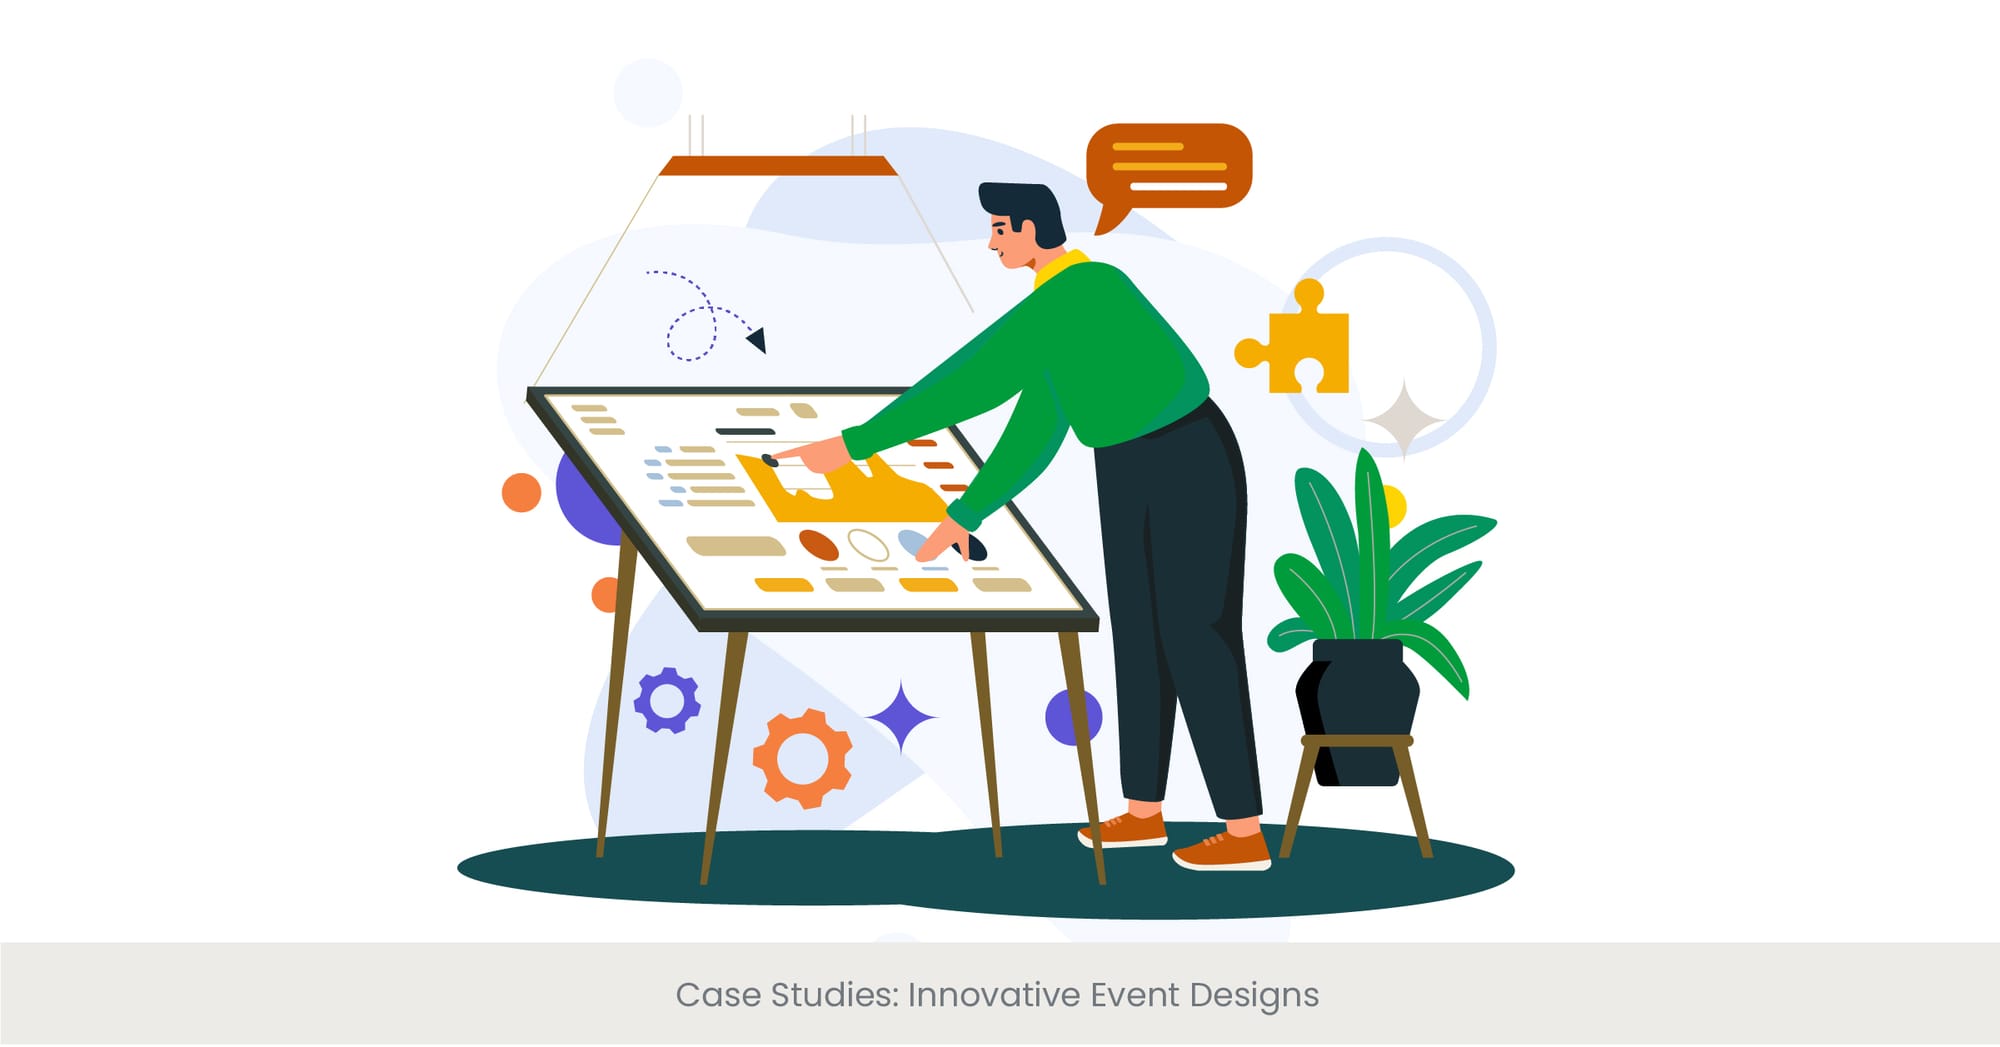 Case Studies: Innovative Event Designs